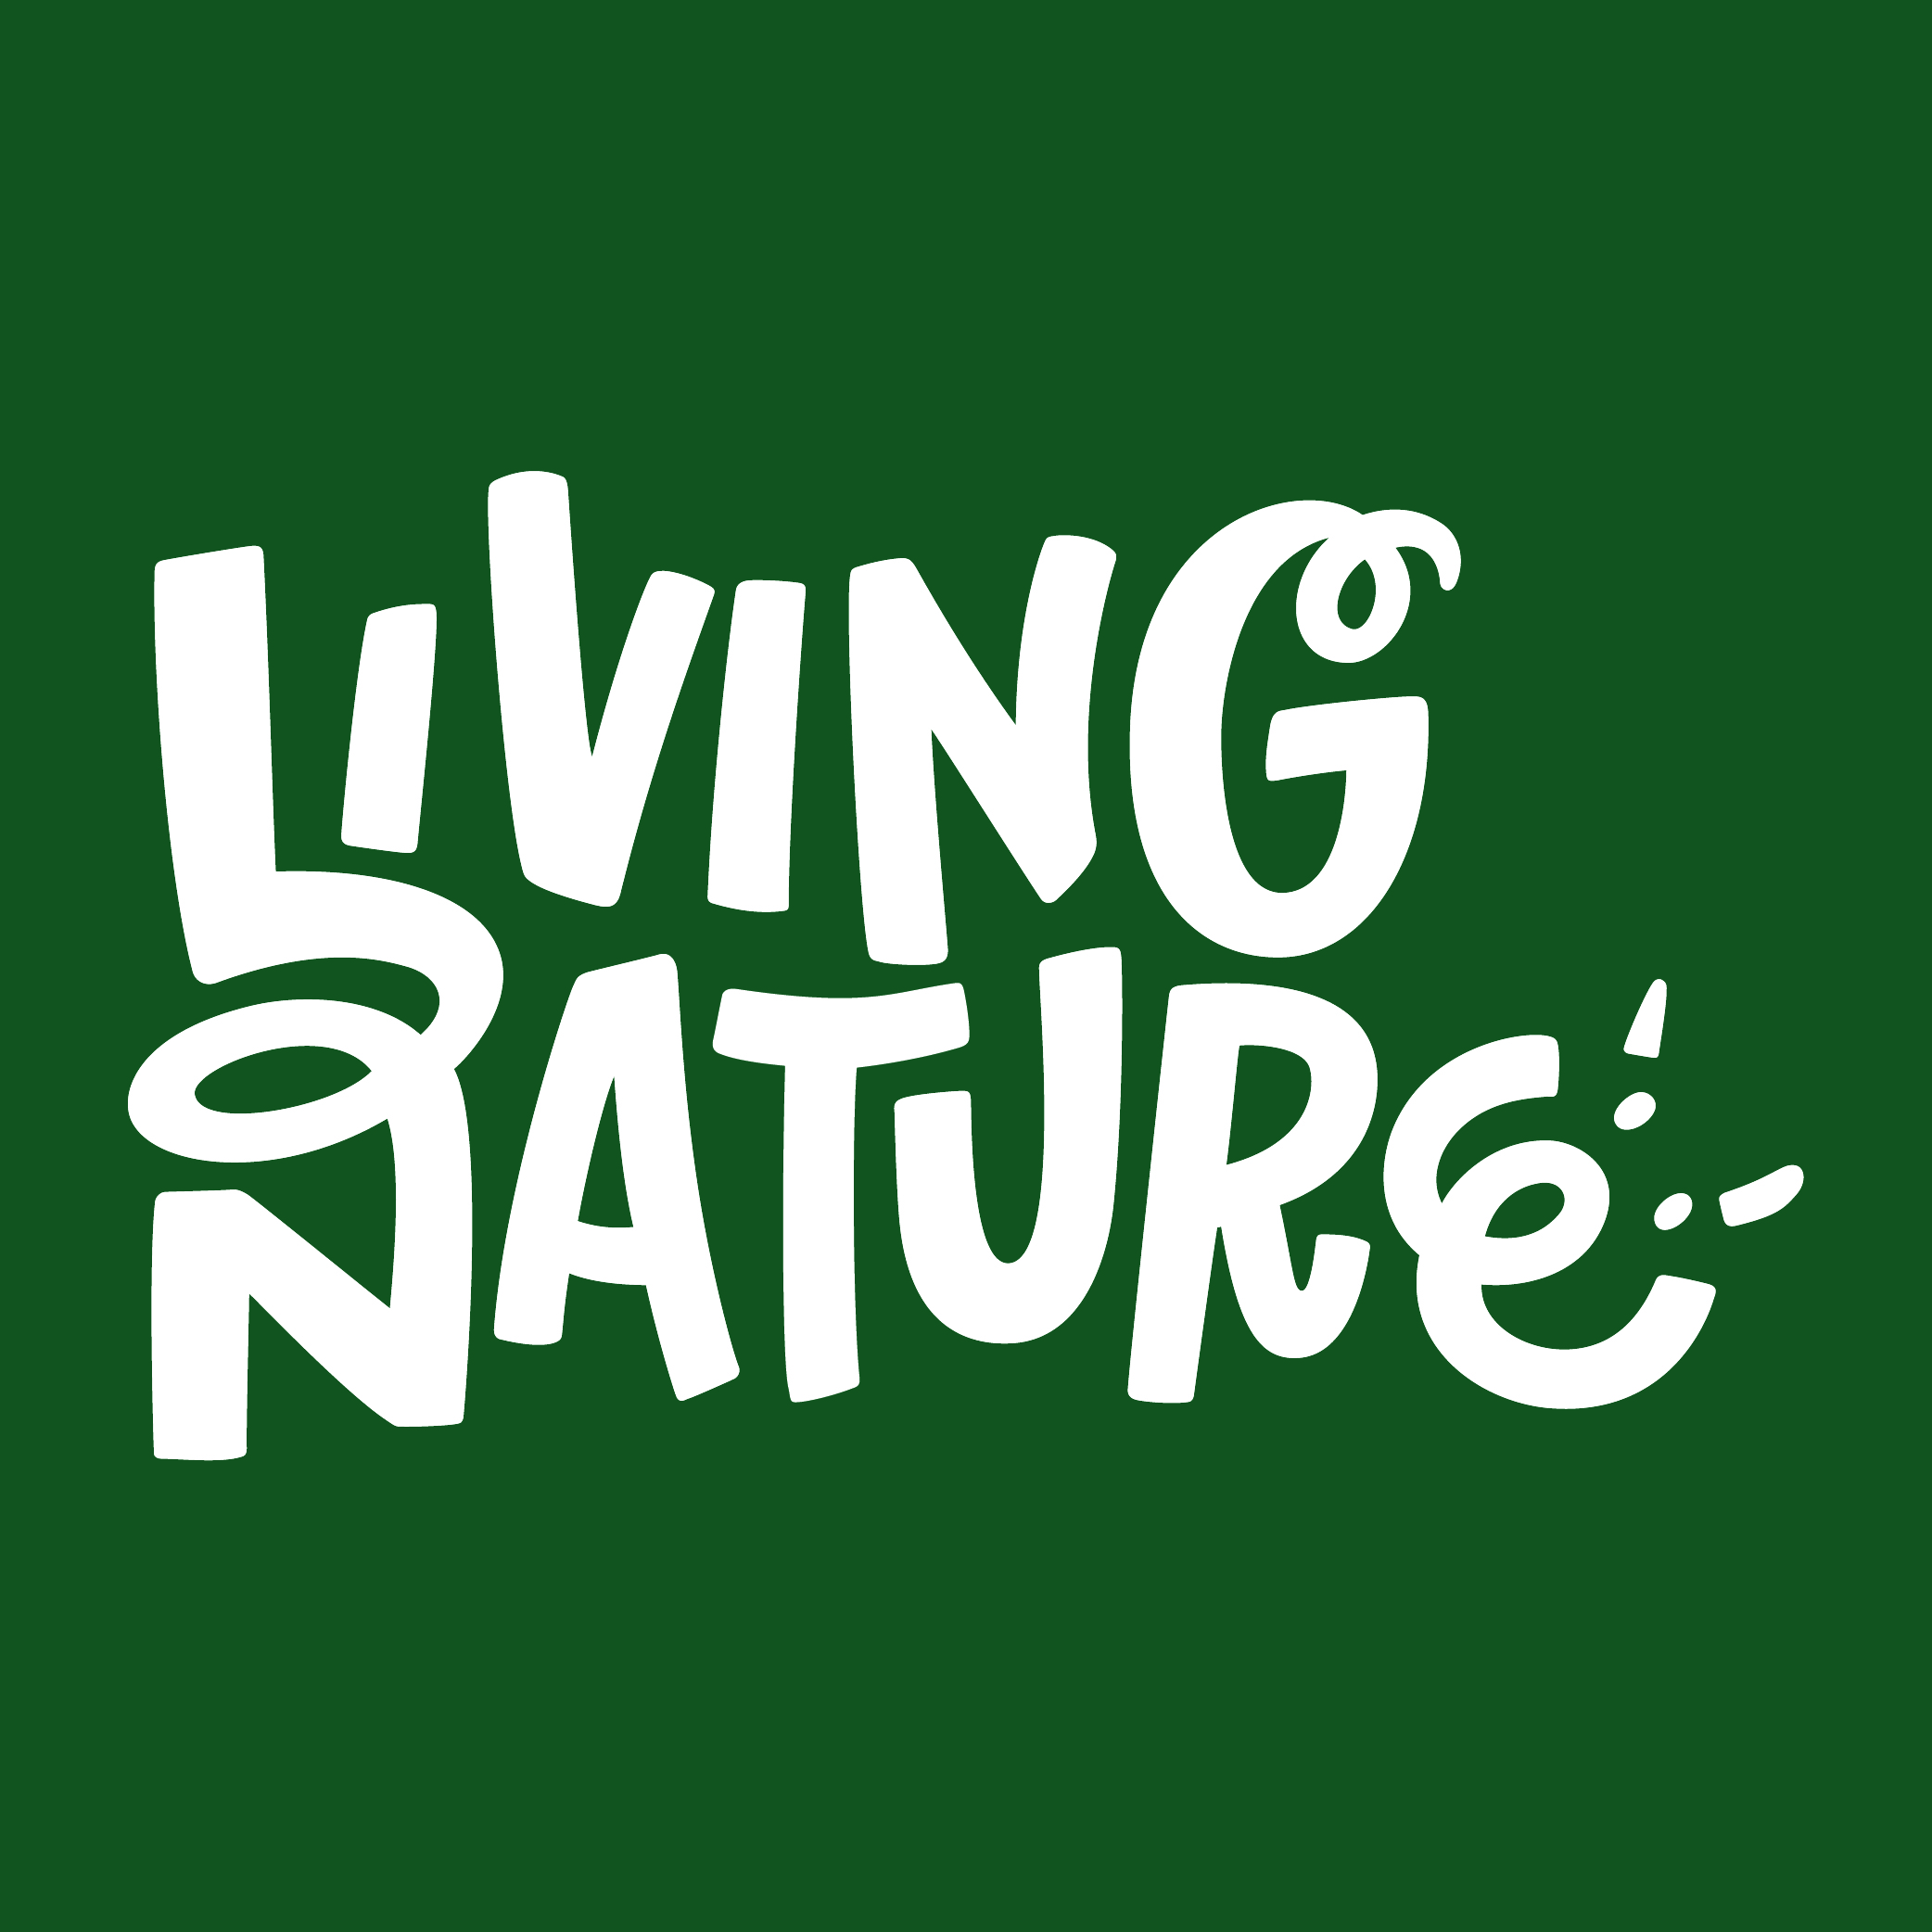 Living Nature logo